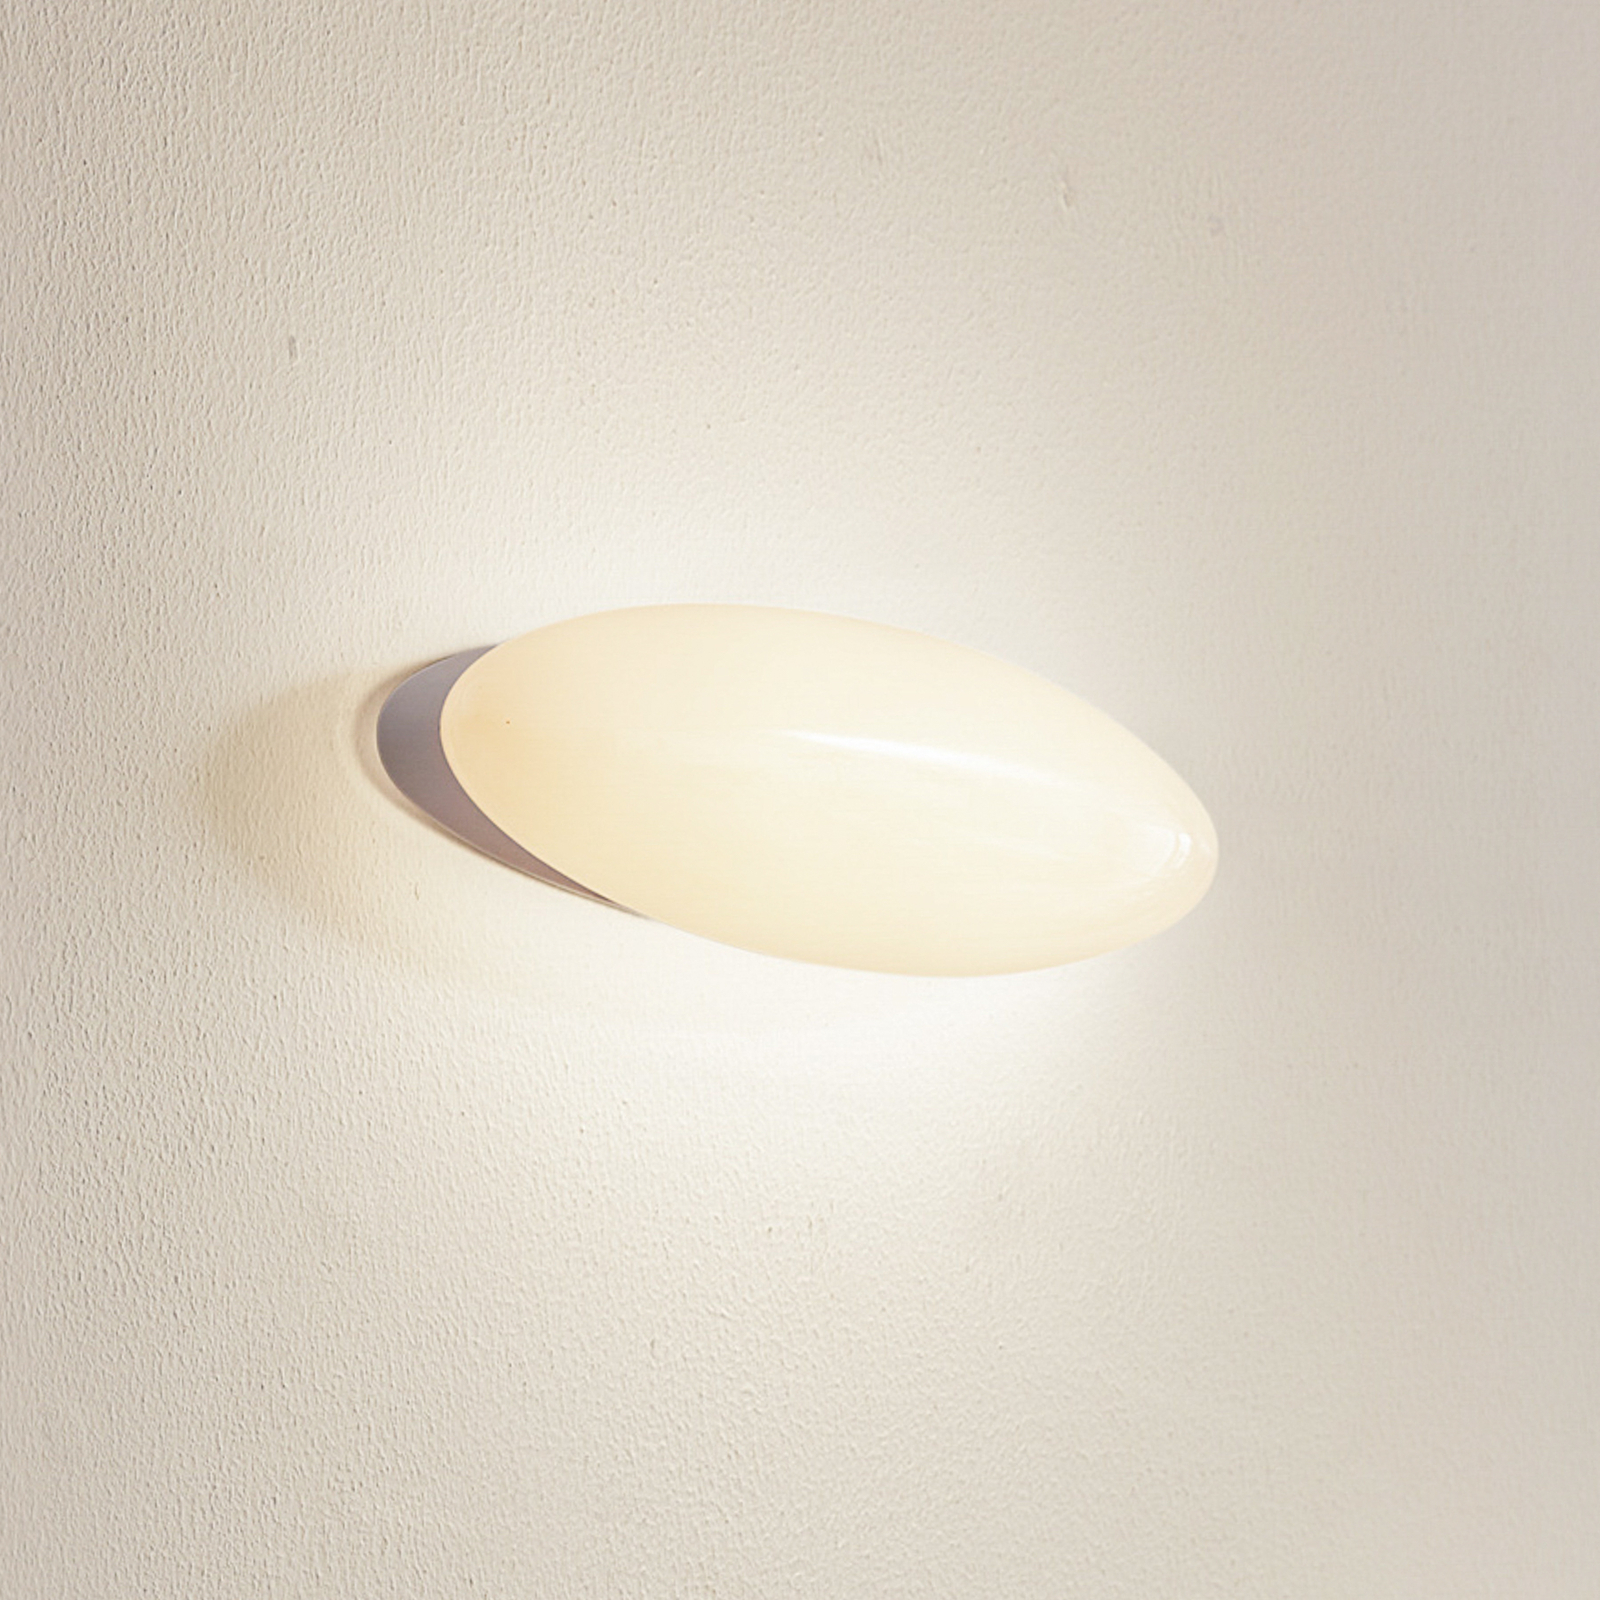 Lucande LED wall light Leihlo, branco, plástico, 8 cm de altura